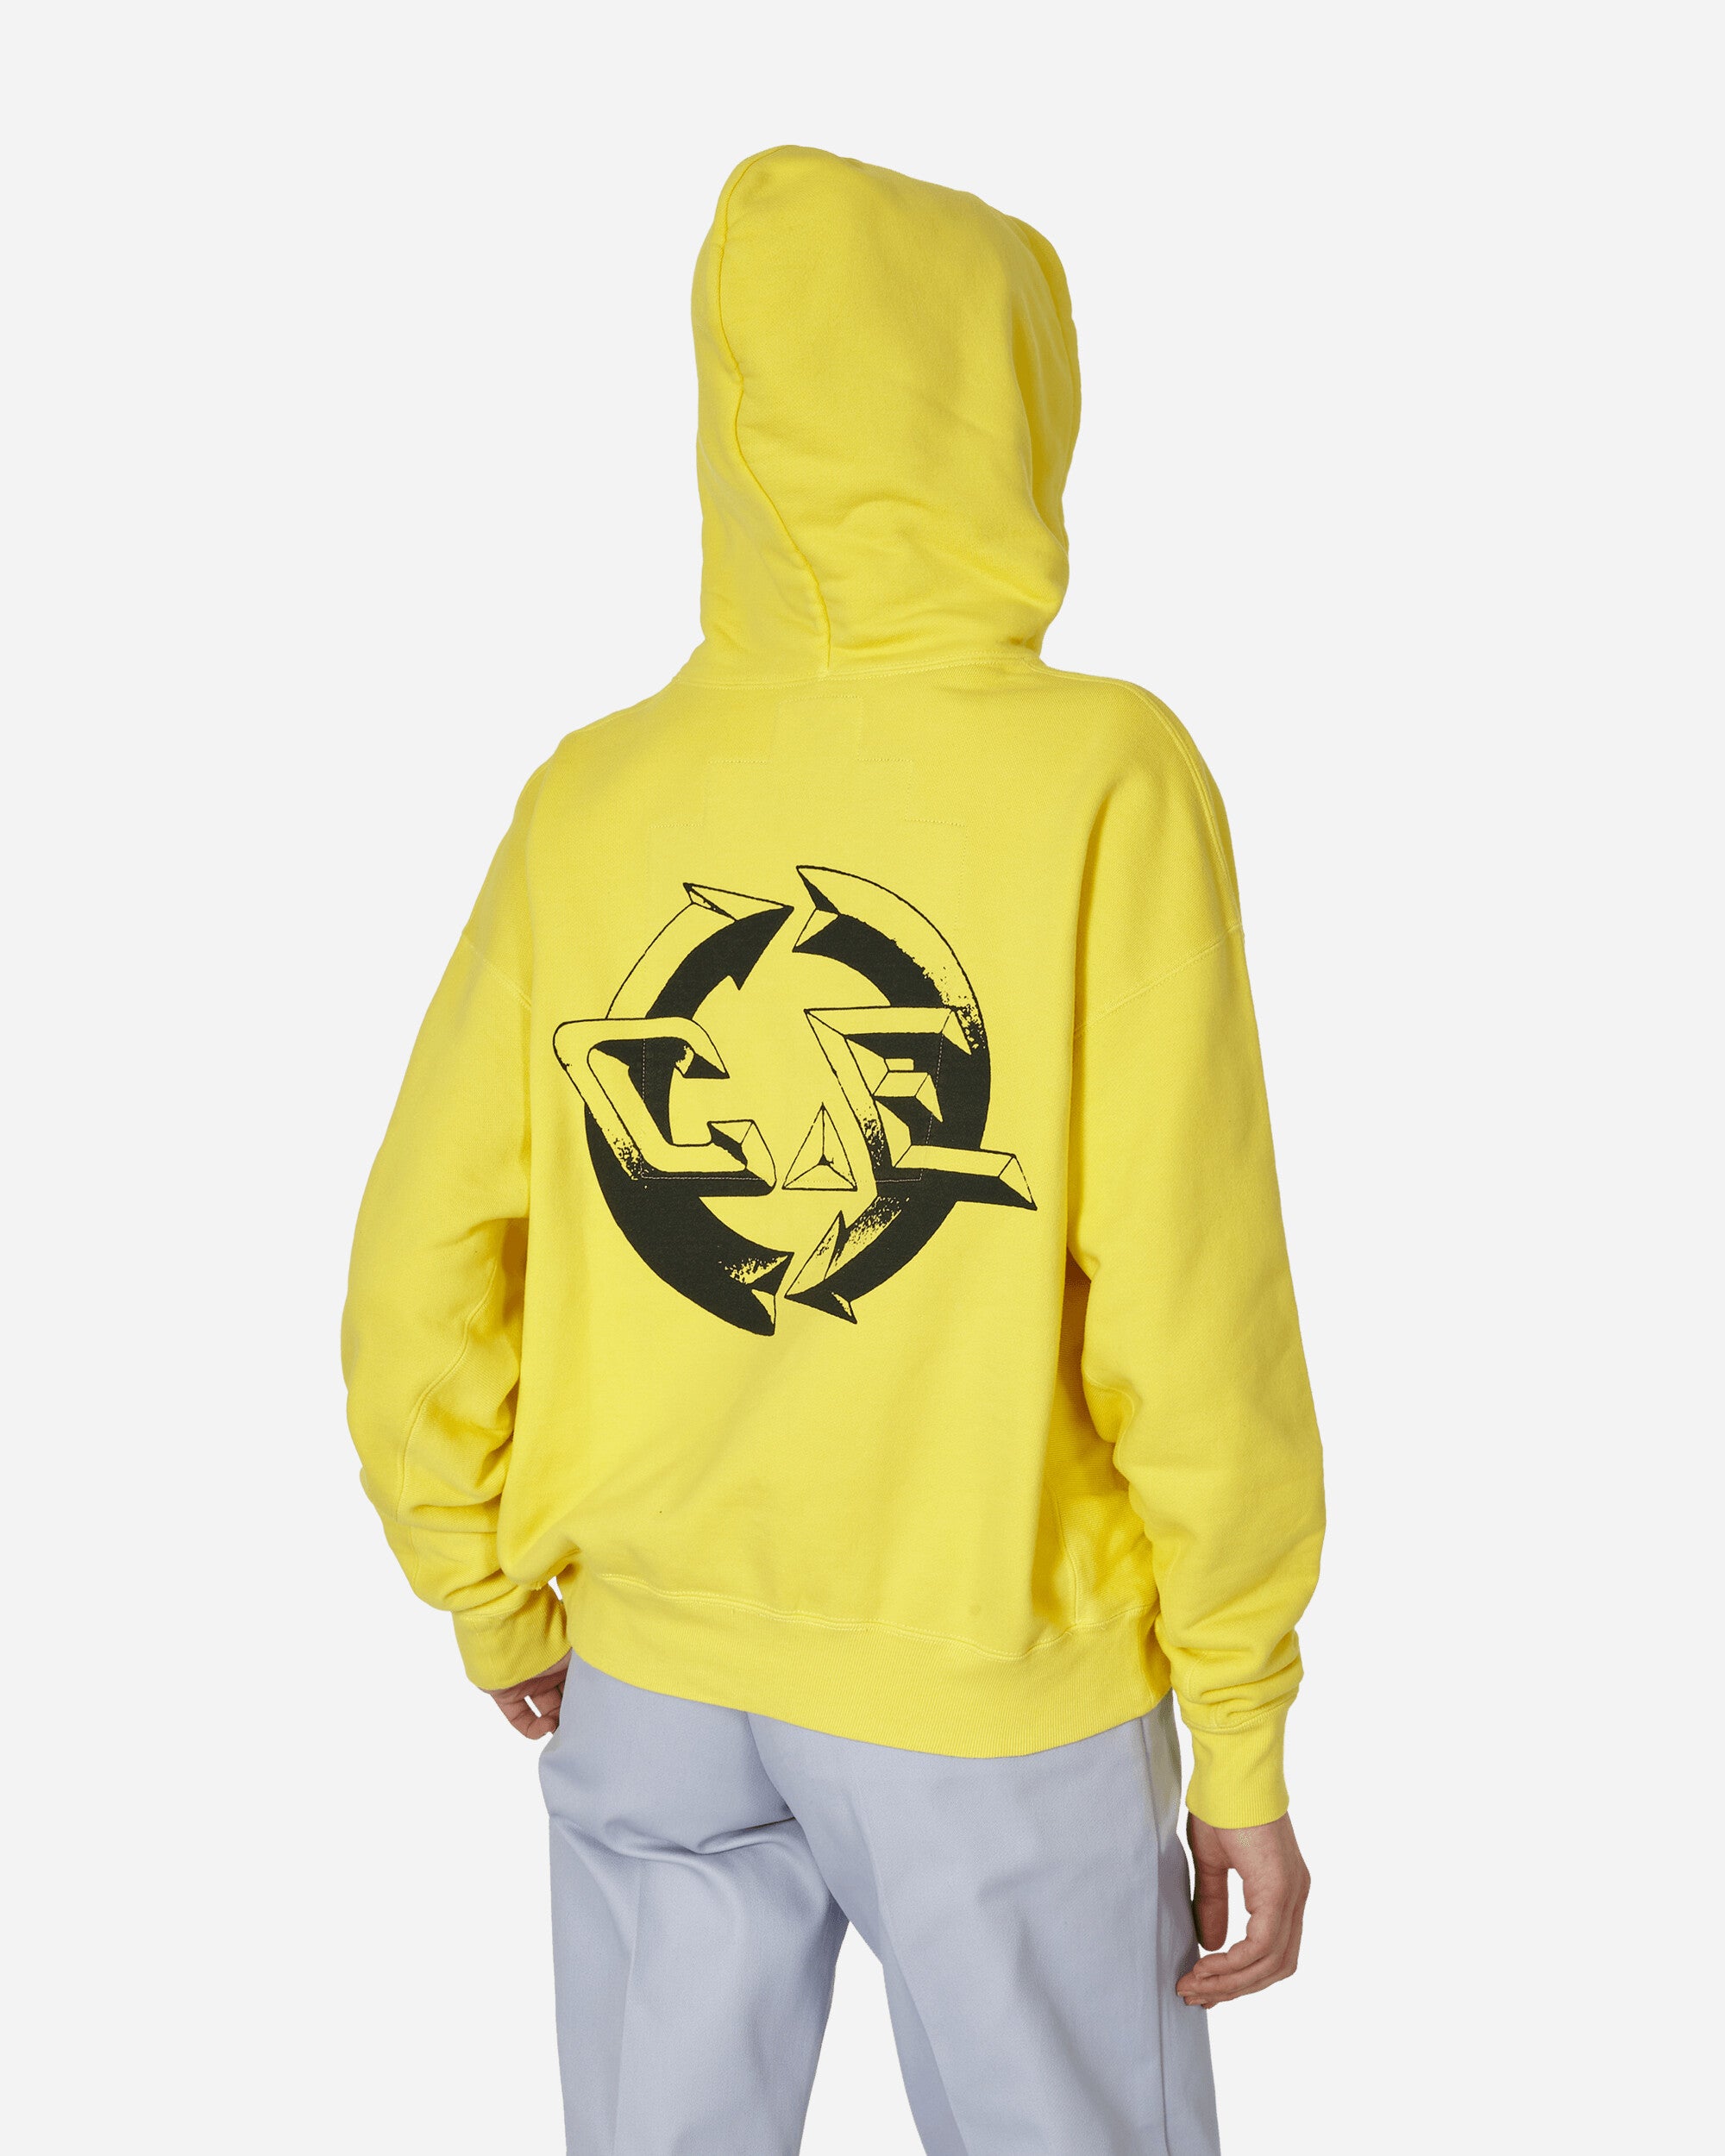 Cav Empt Overdye Reprocess Heavy Hoody Yellow Sweatshirts Hoodies CES25CS07 YLLW